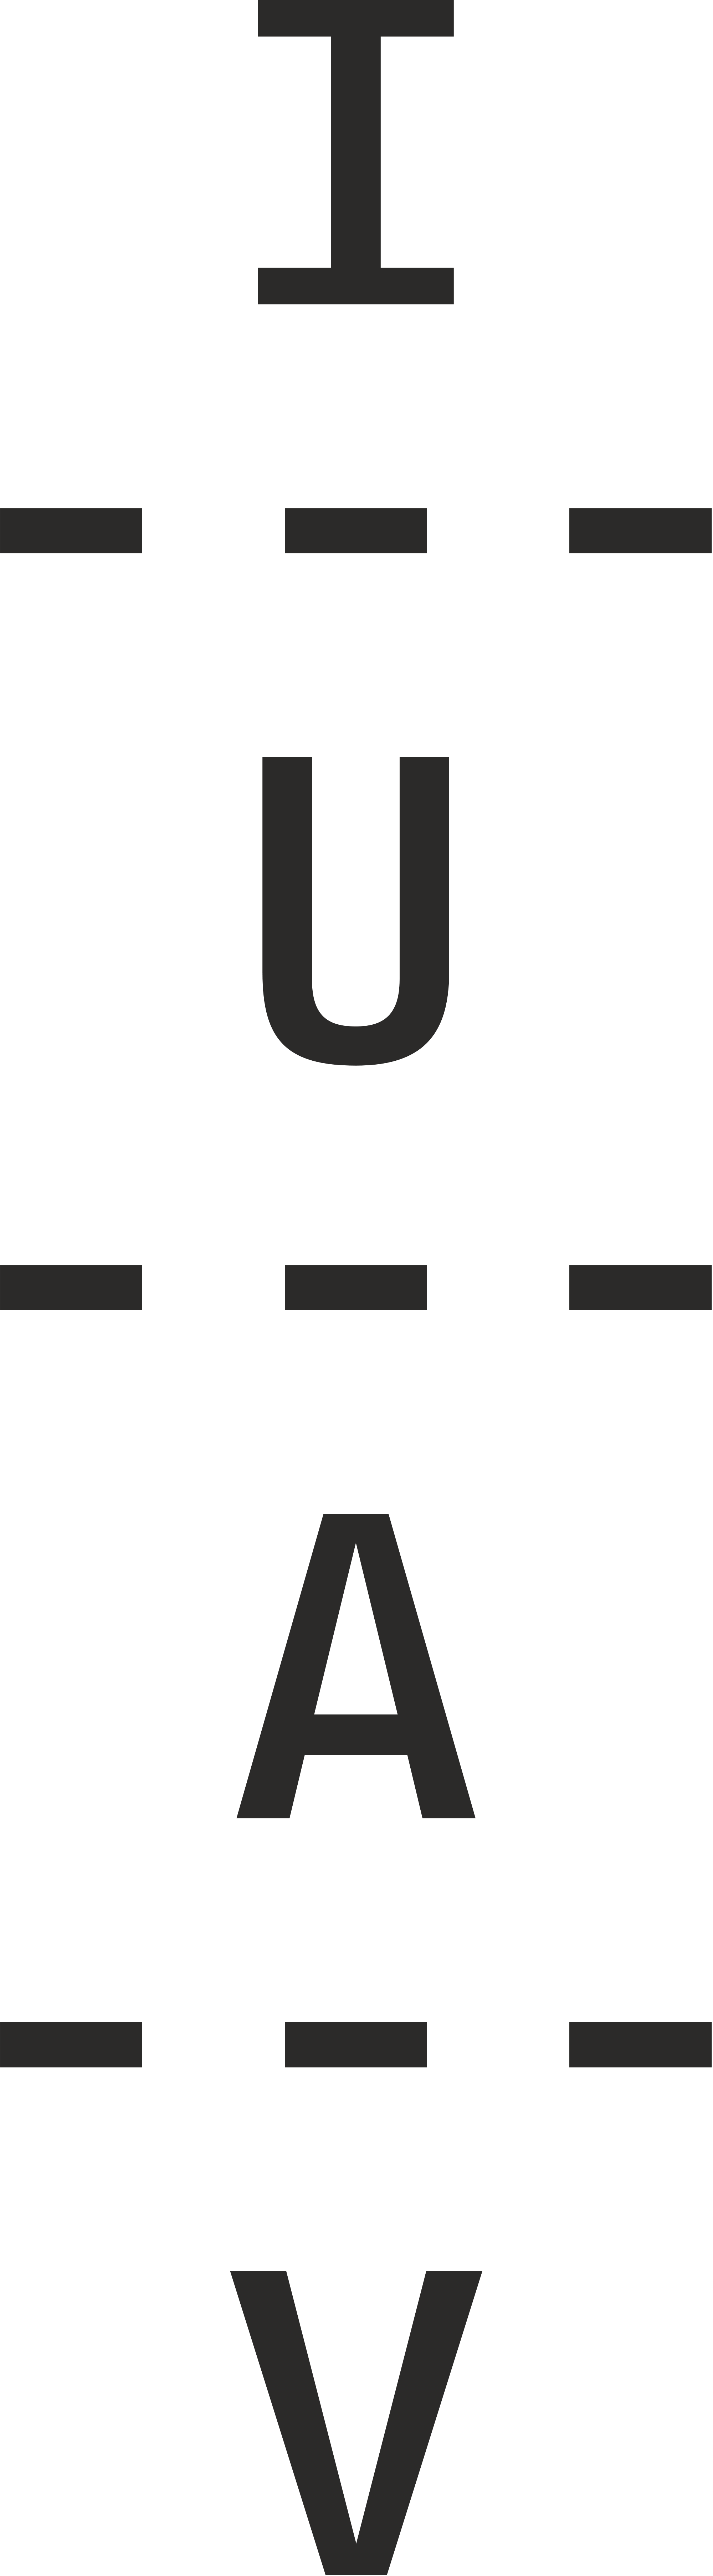 University Iuav Of Venice - Università Iuav Di Venezia Logo (2000x7225)